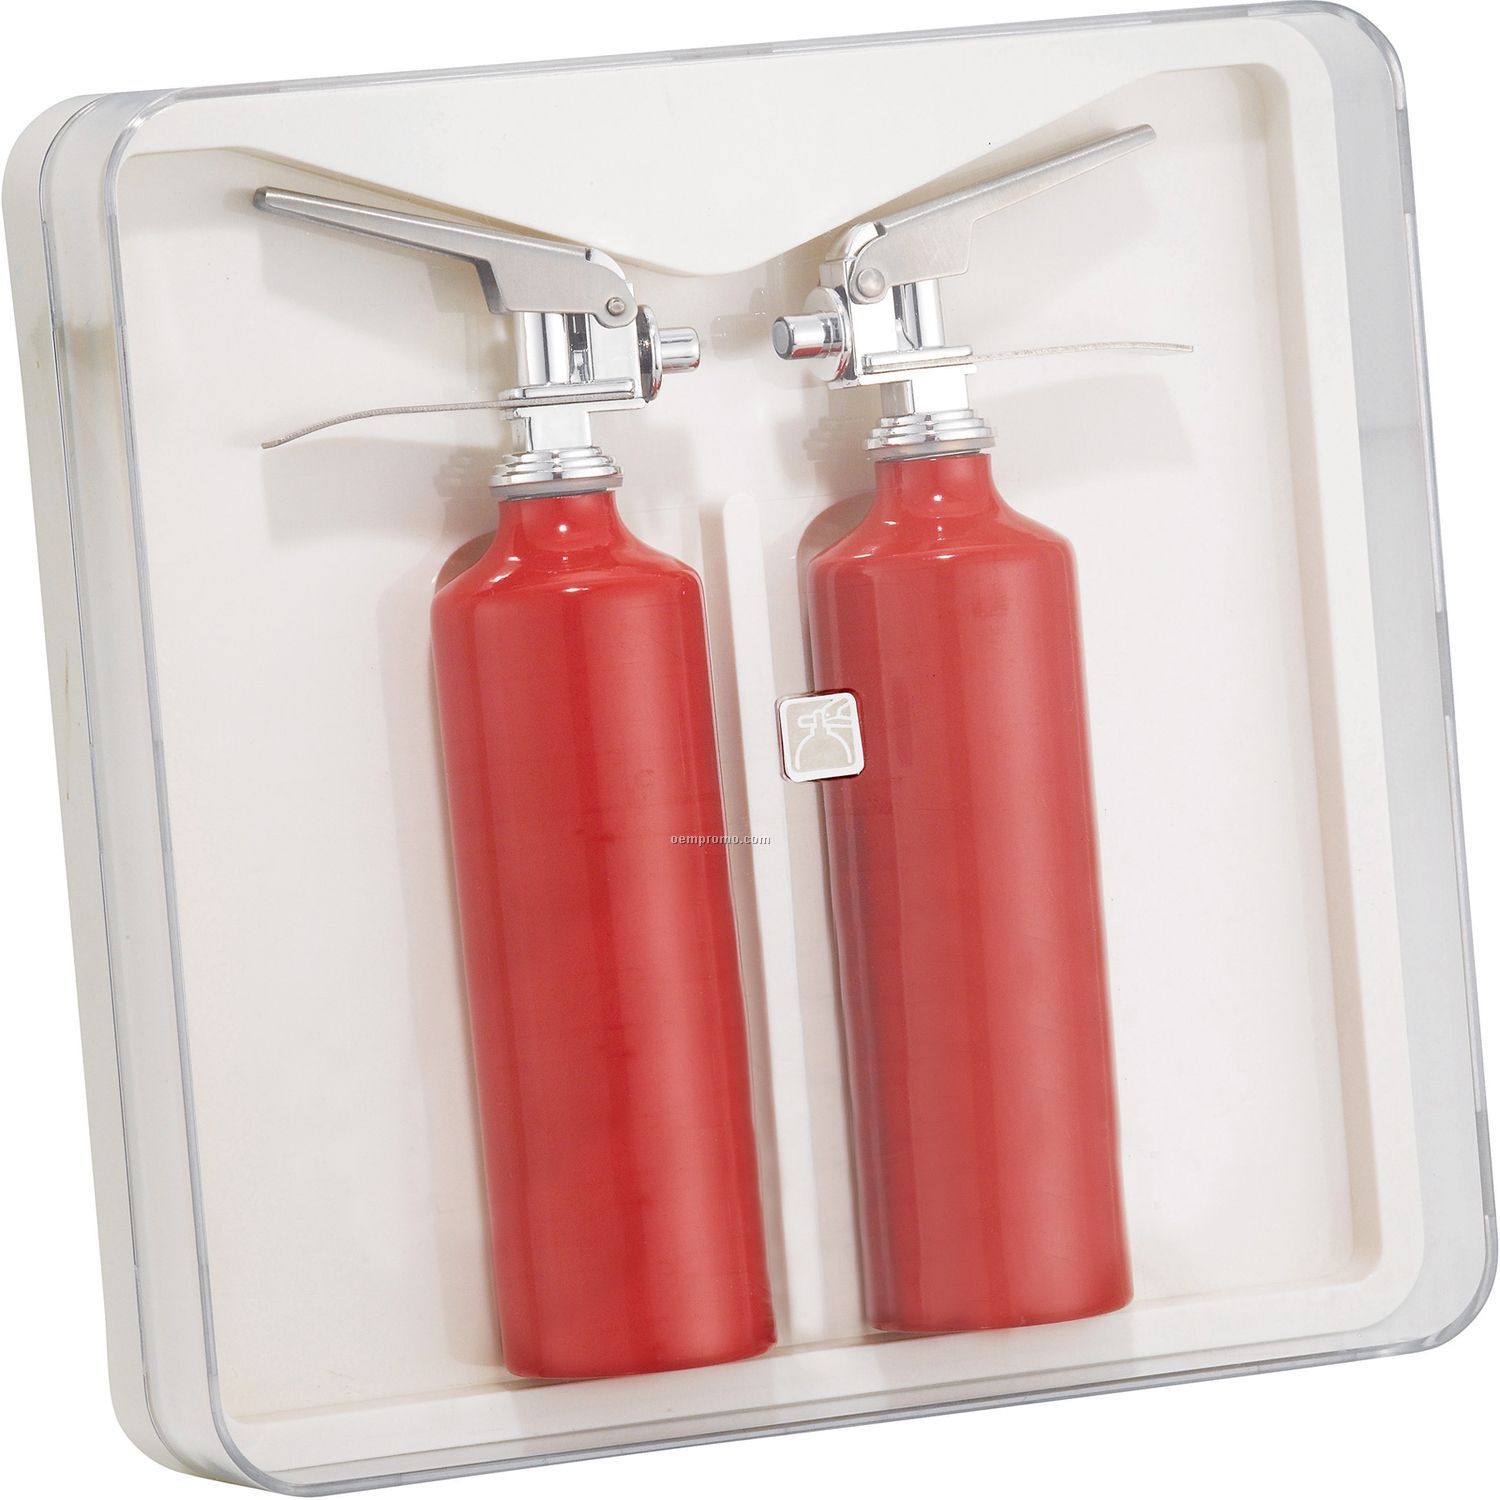 Oil And Vinegar Fire Extinguisher Set